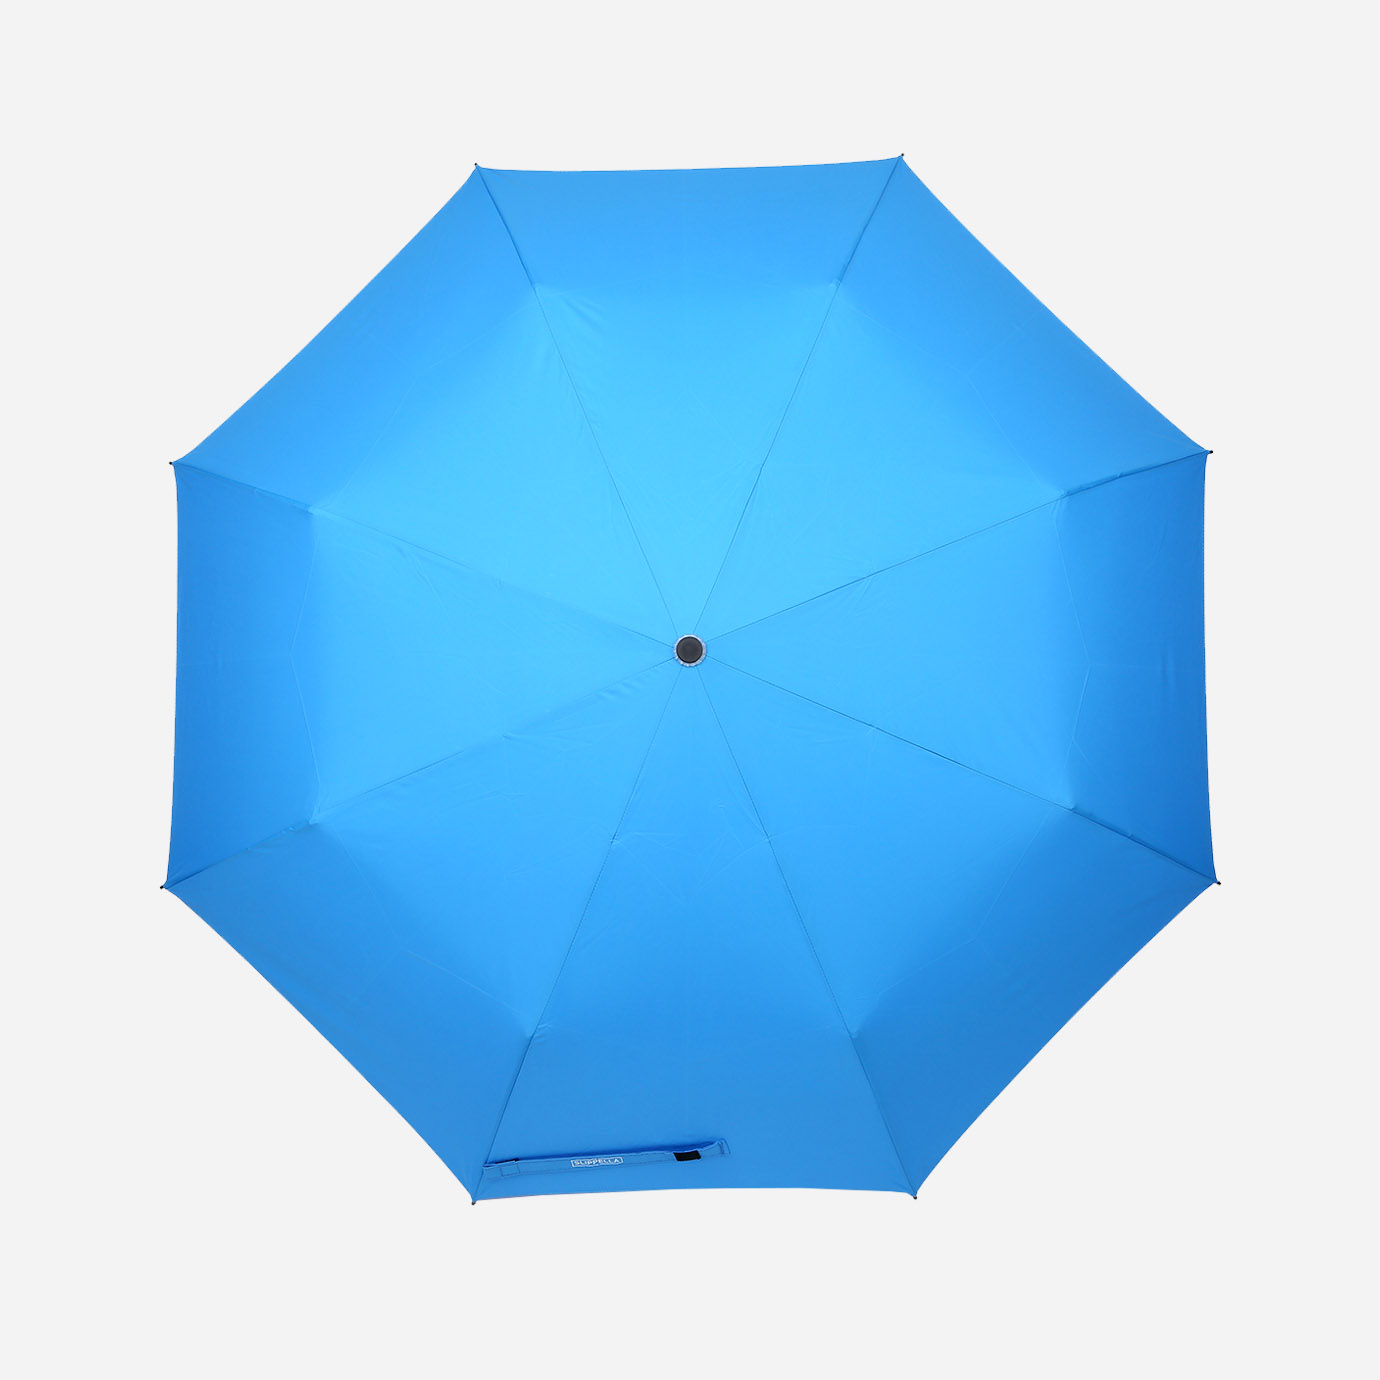 Slippella – Lightweight Water Repellent Umbrella Bundle (Bundle Special)